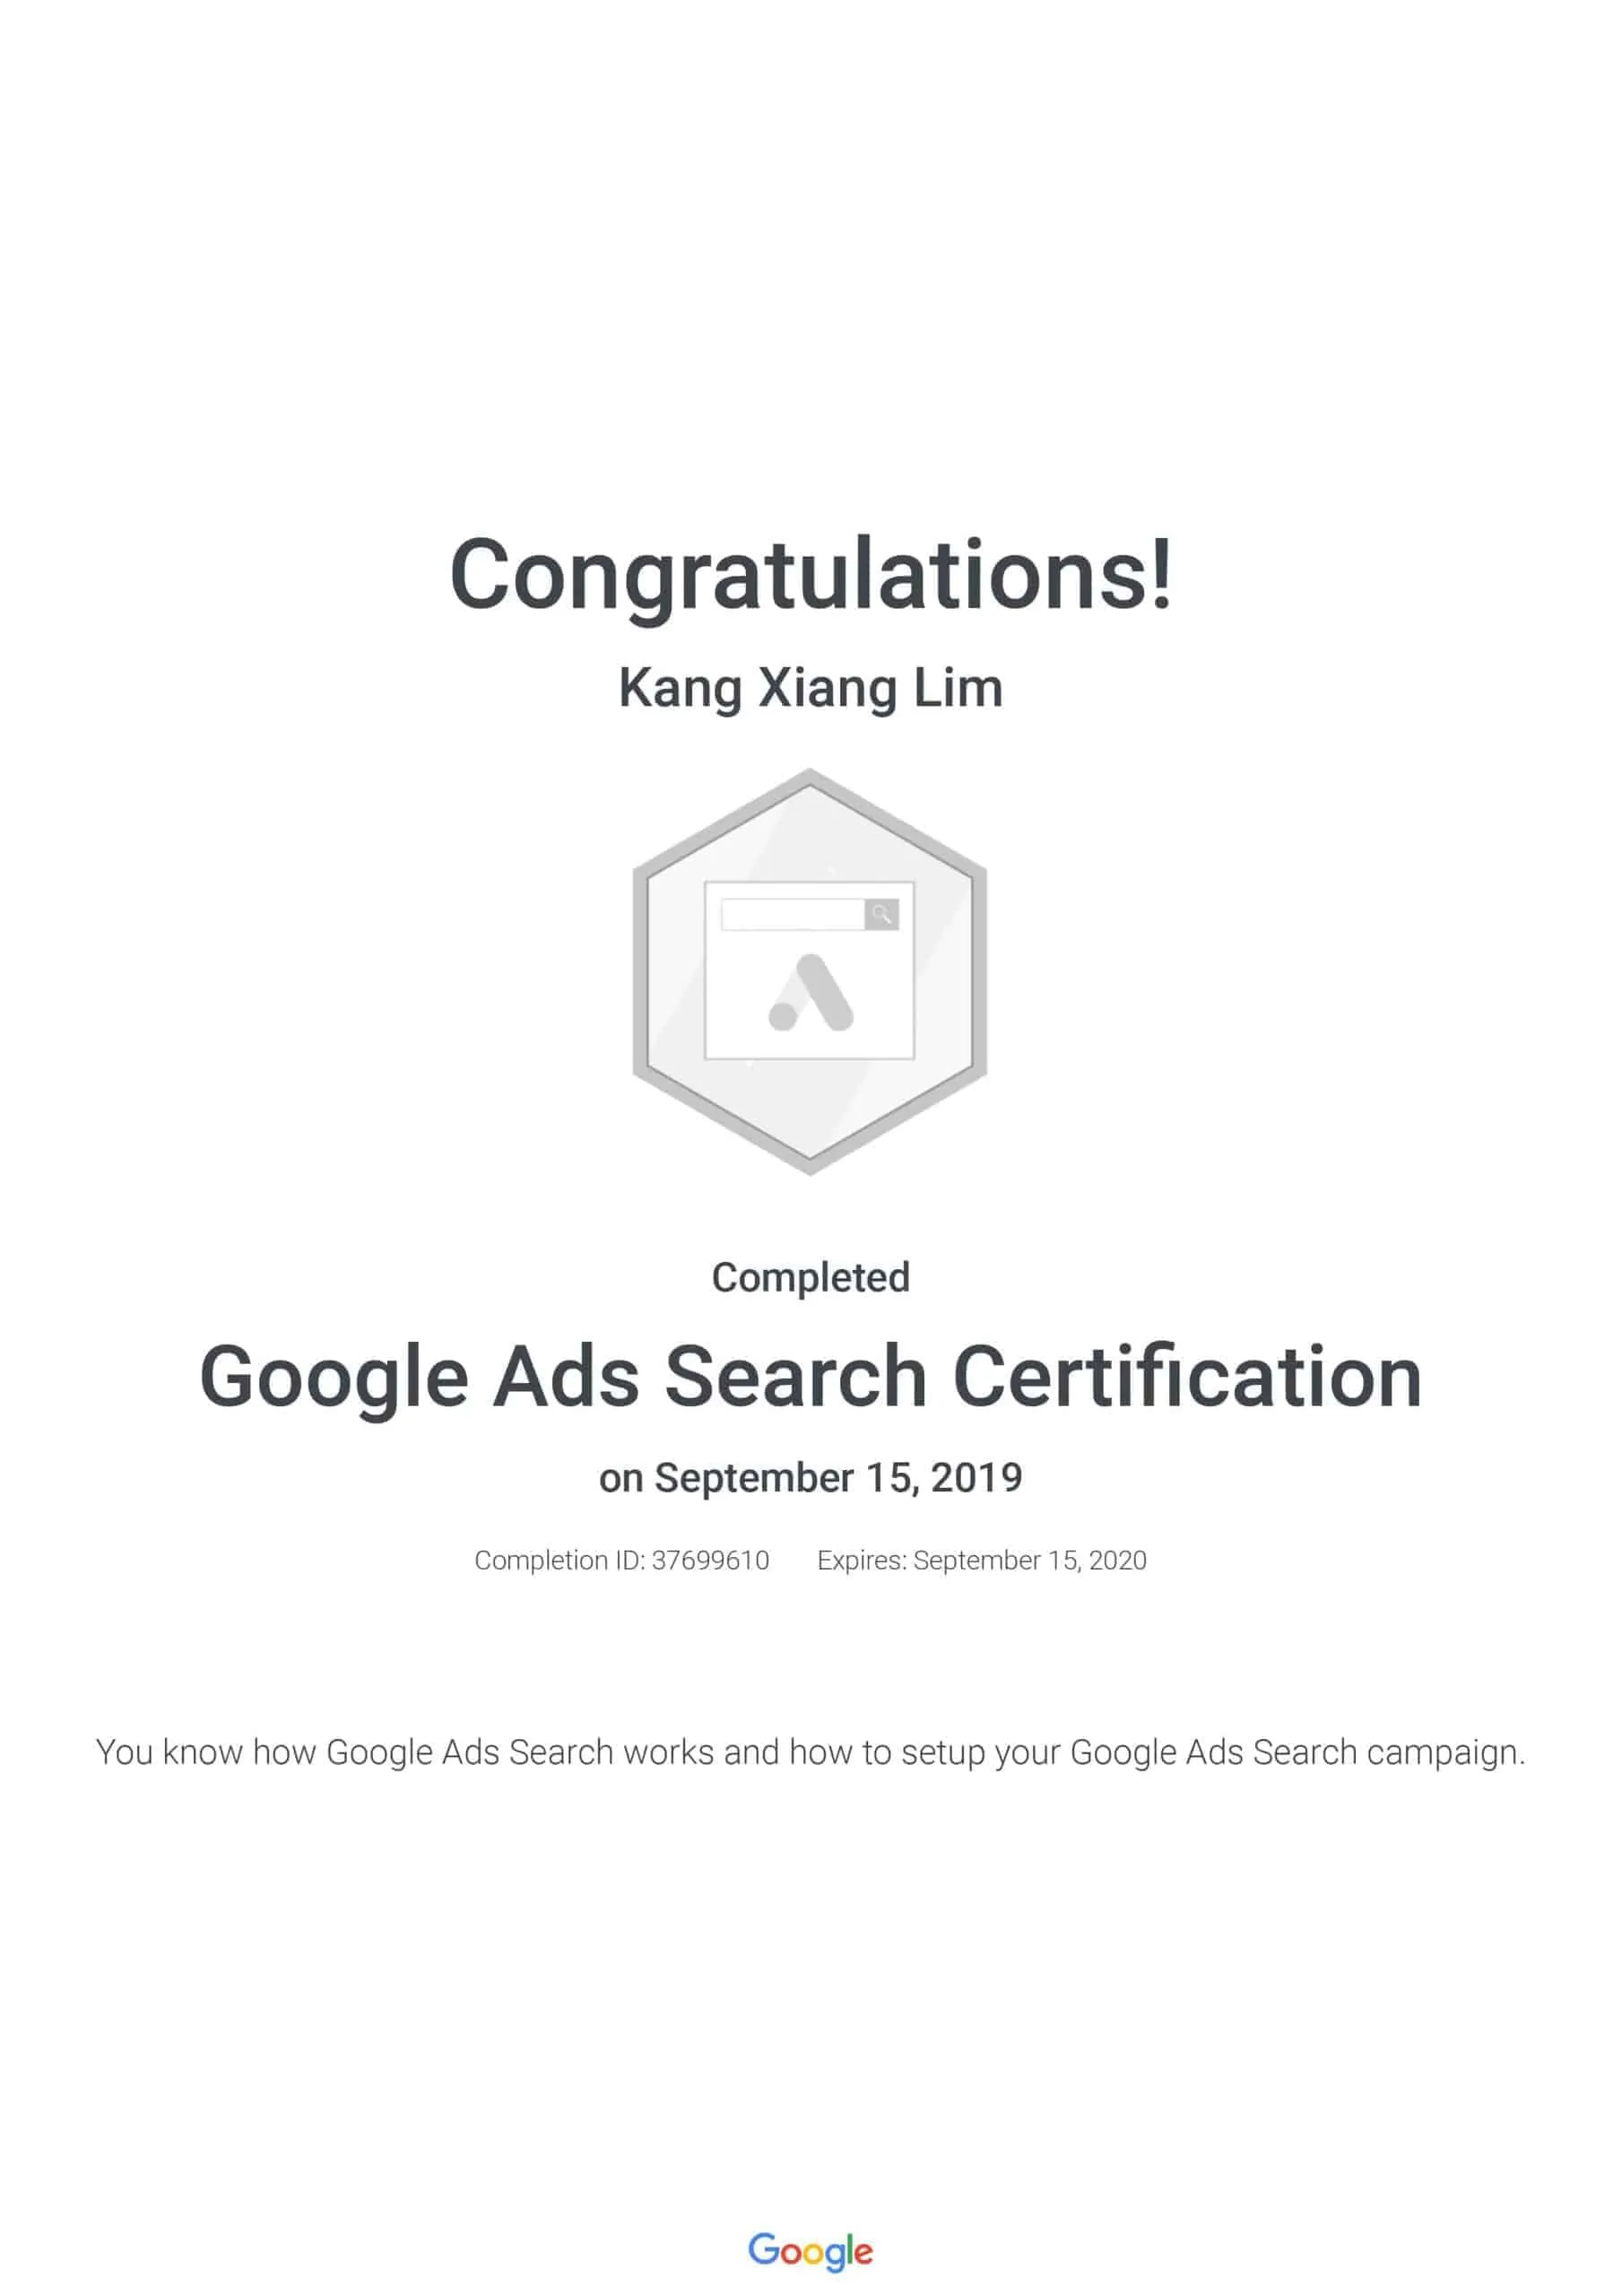 Google Ads Search Certification - Kang Xiang